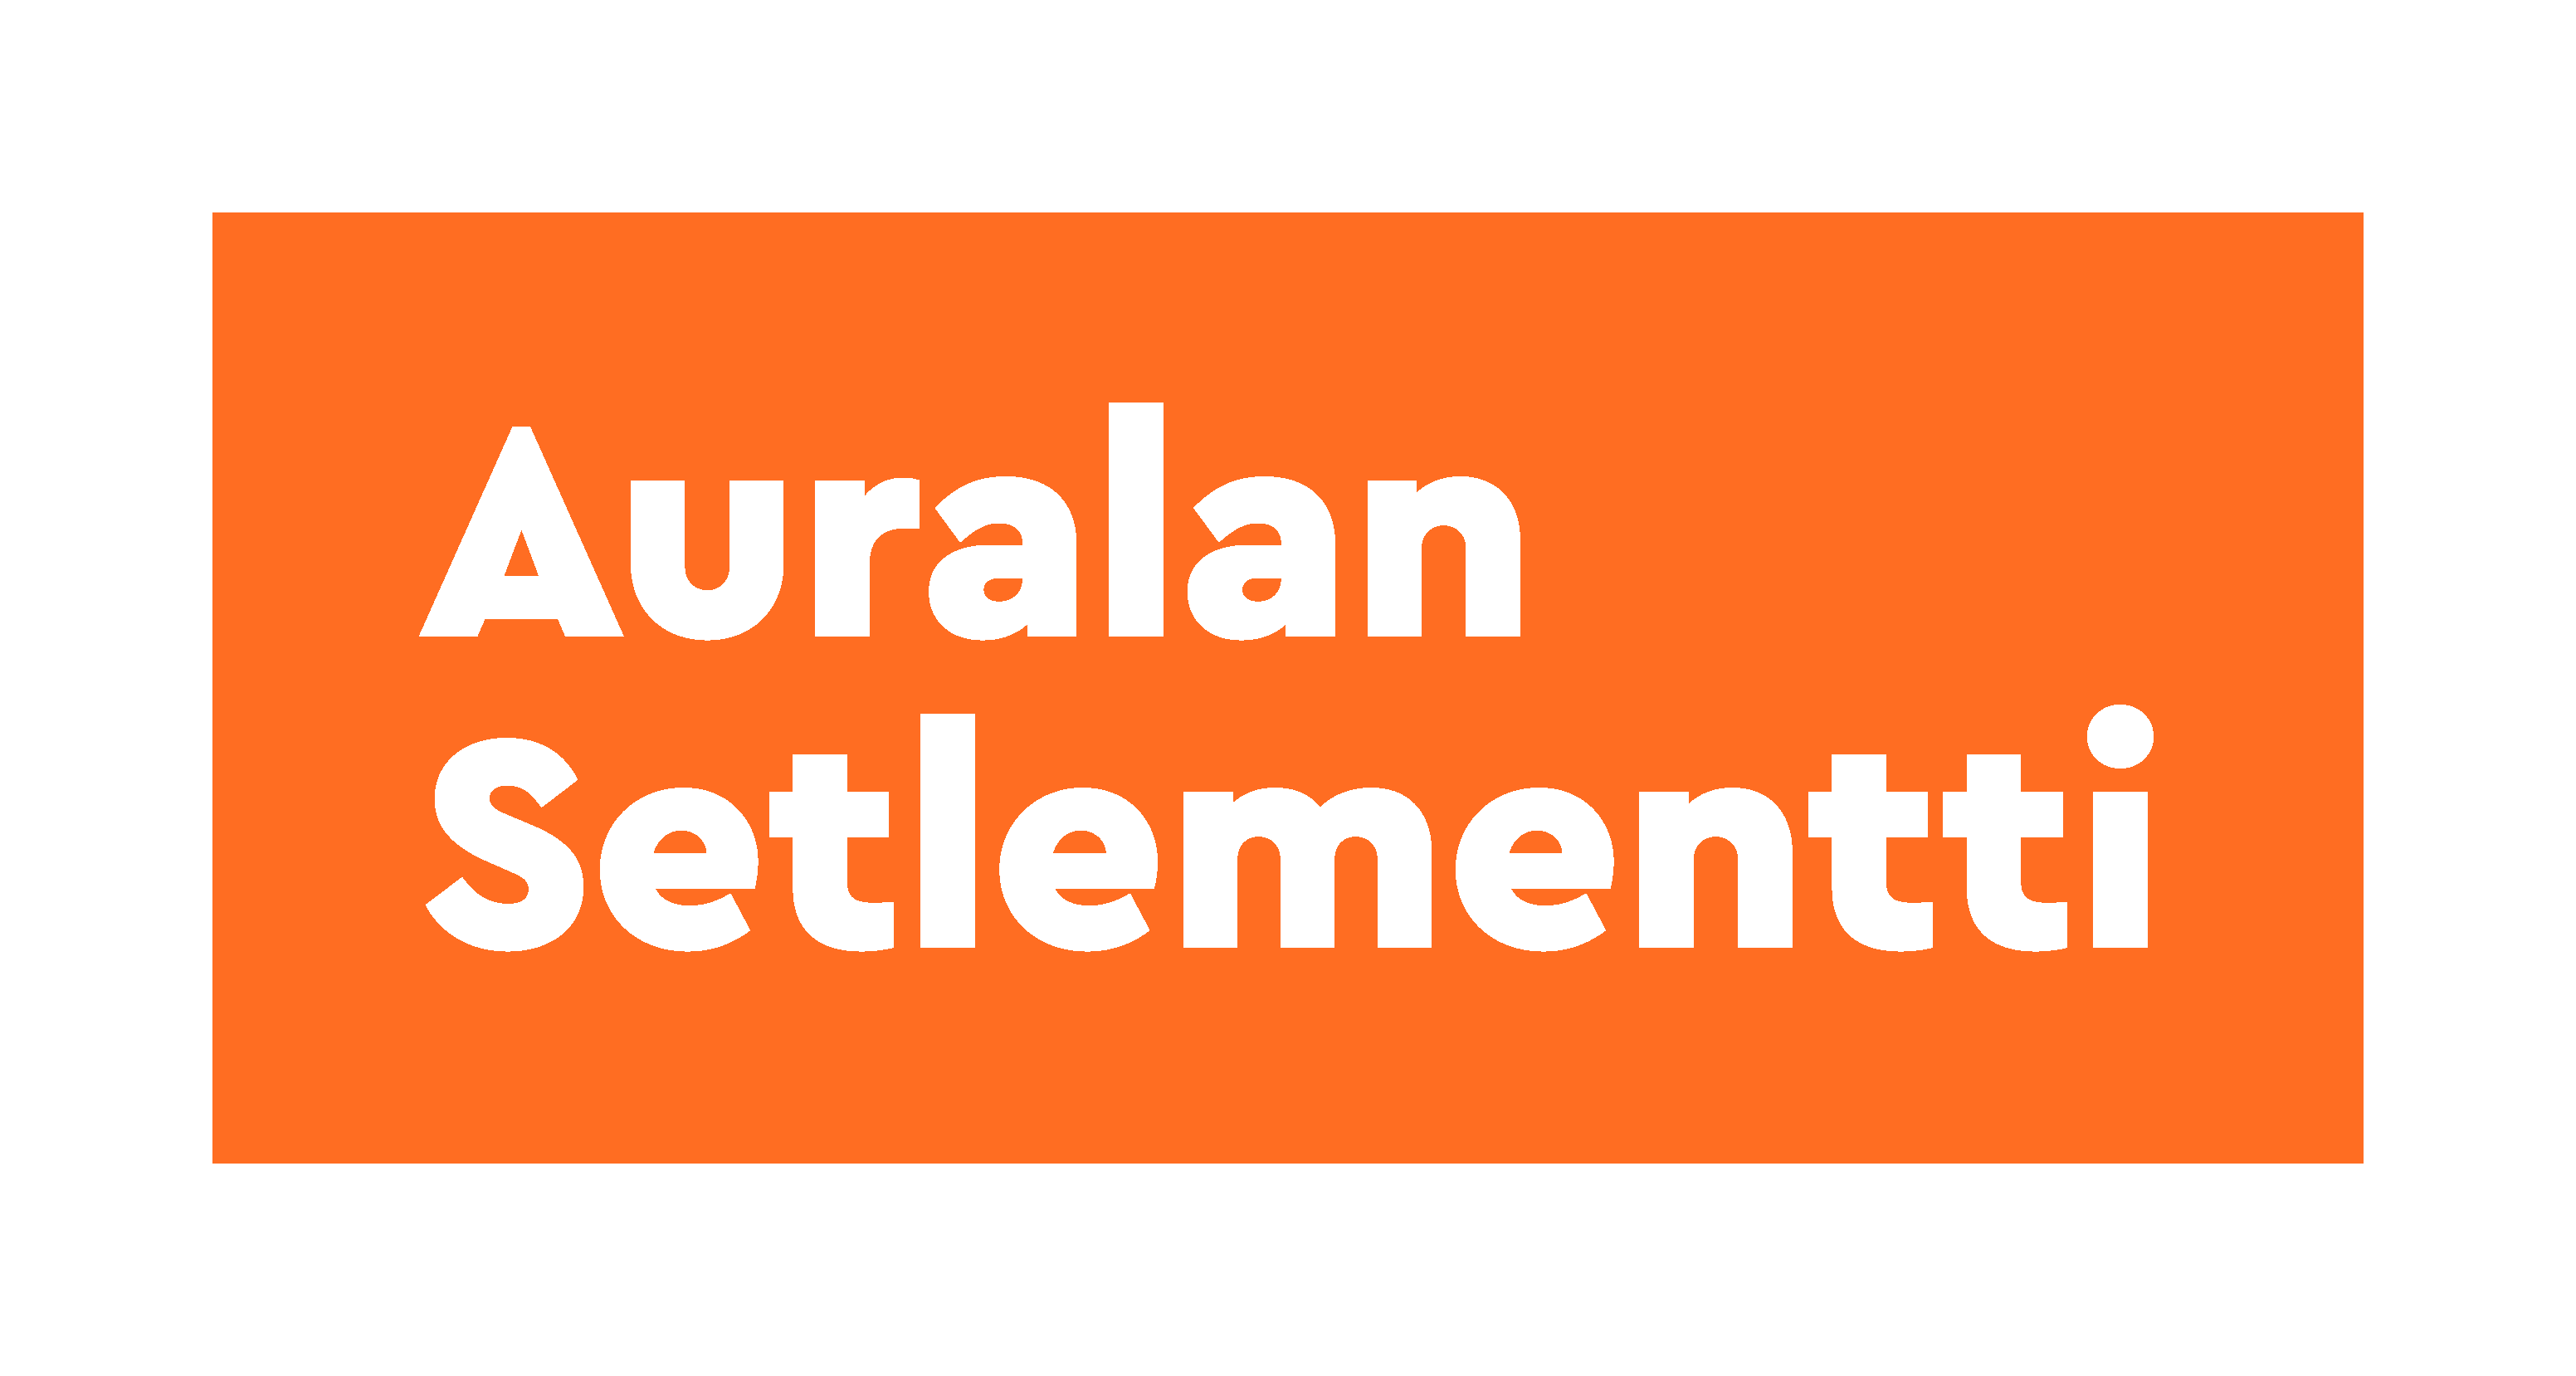 Auralan Setlementti ryn logo.